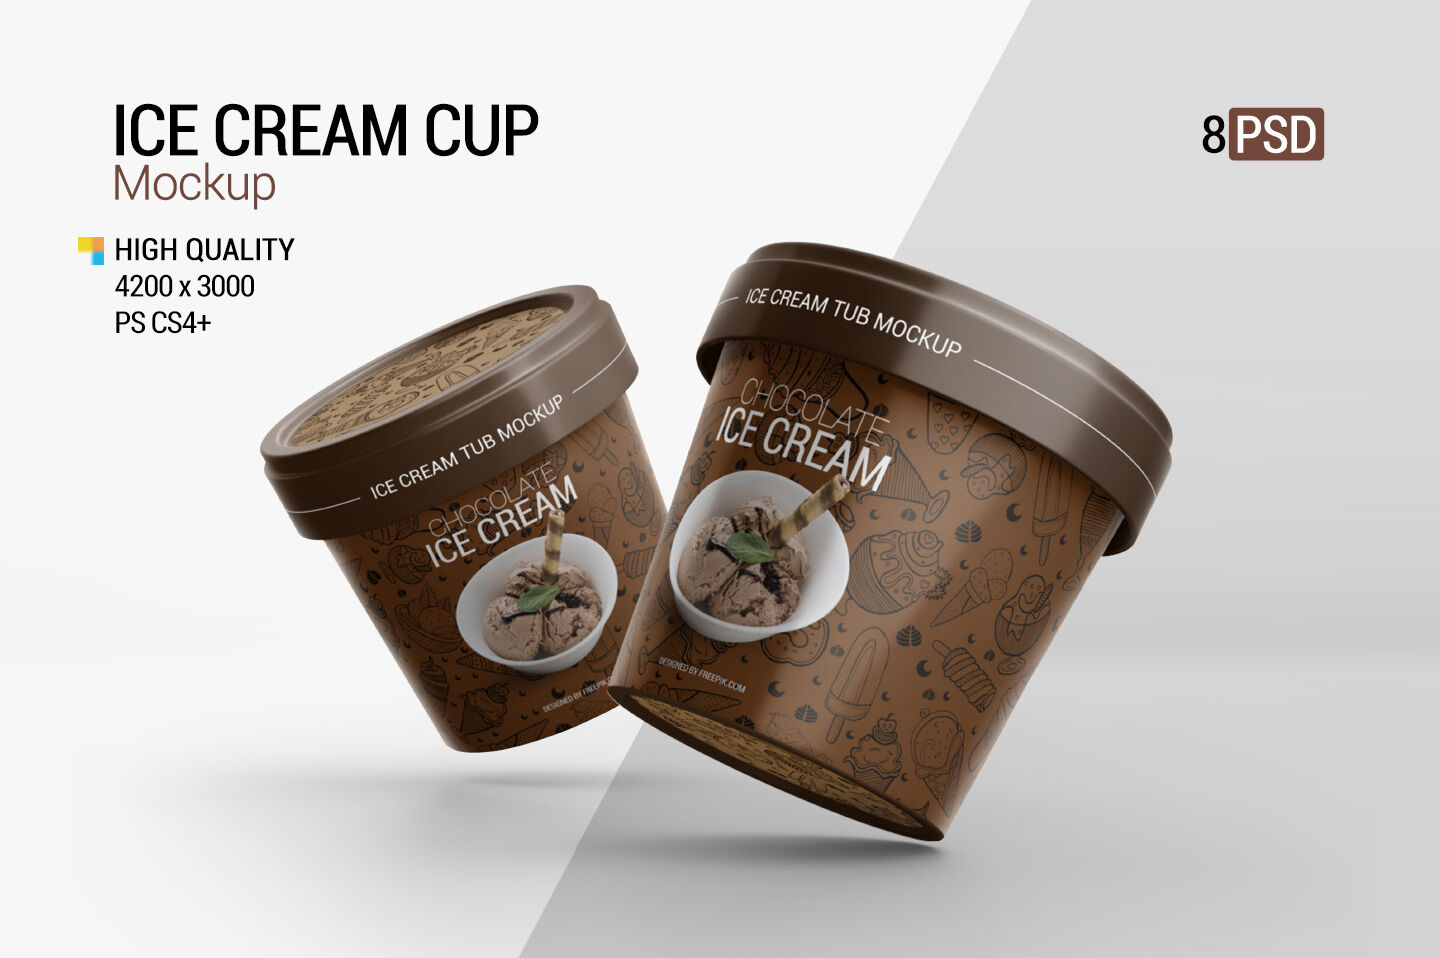 https://media1.thehungryjpeg.com/thumbs2/ori_3788209_z3e33a7q6rp1okm8uca872f68jcza94cxbp6h3c7_ice-cream-cup-mockup.jpg